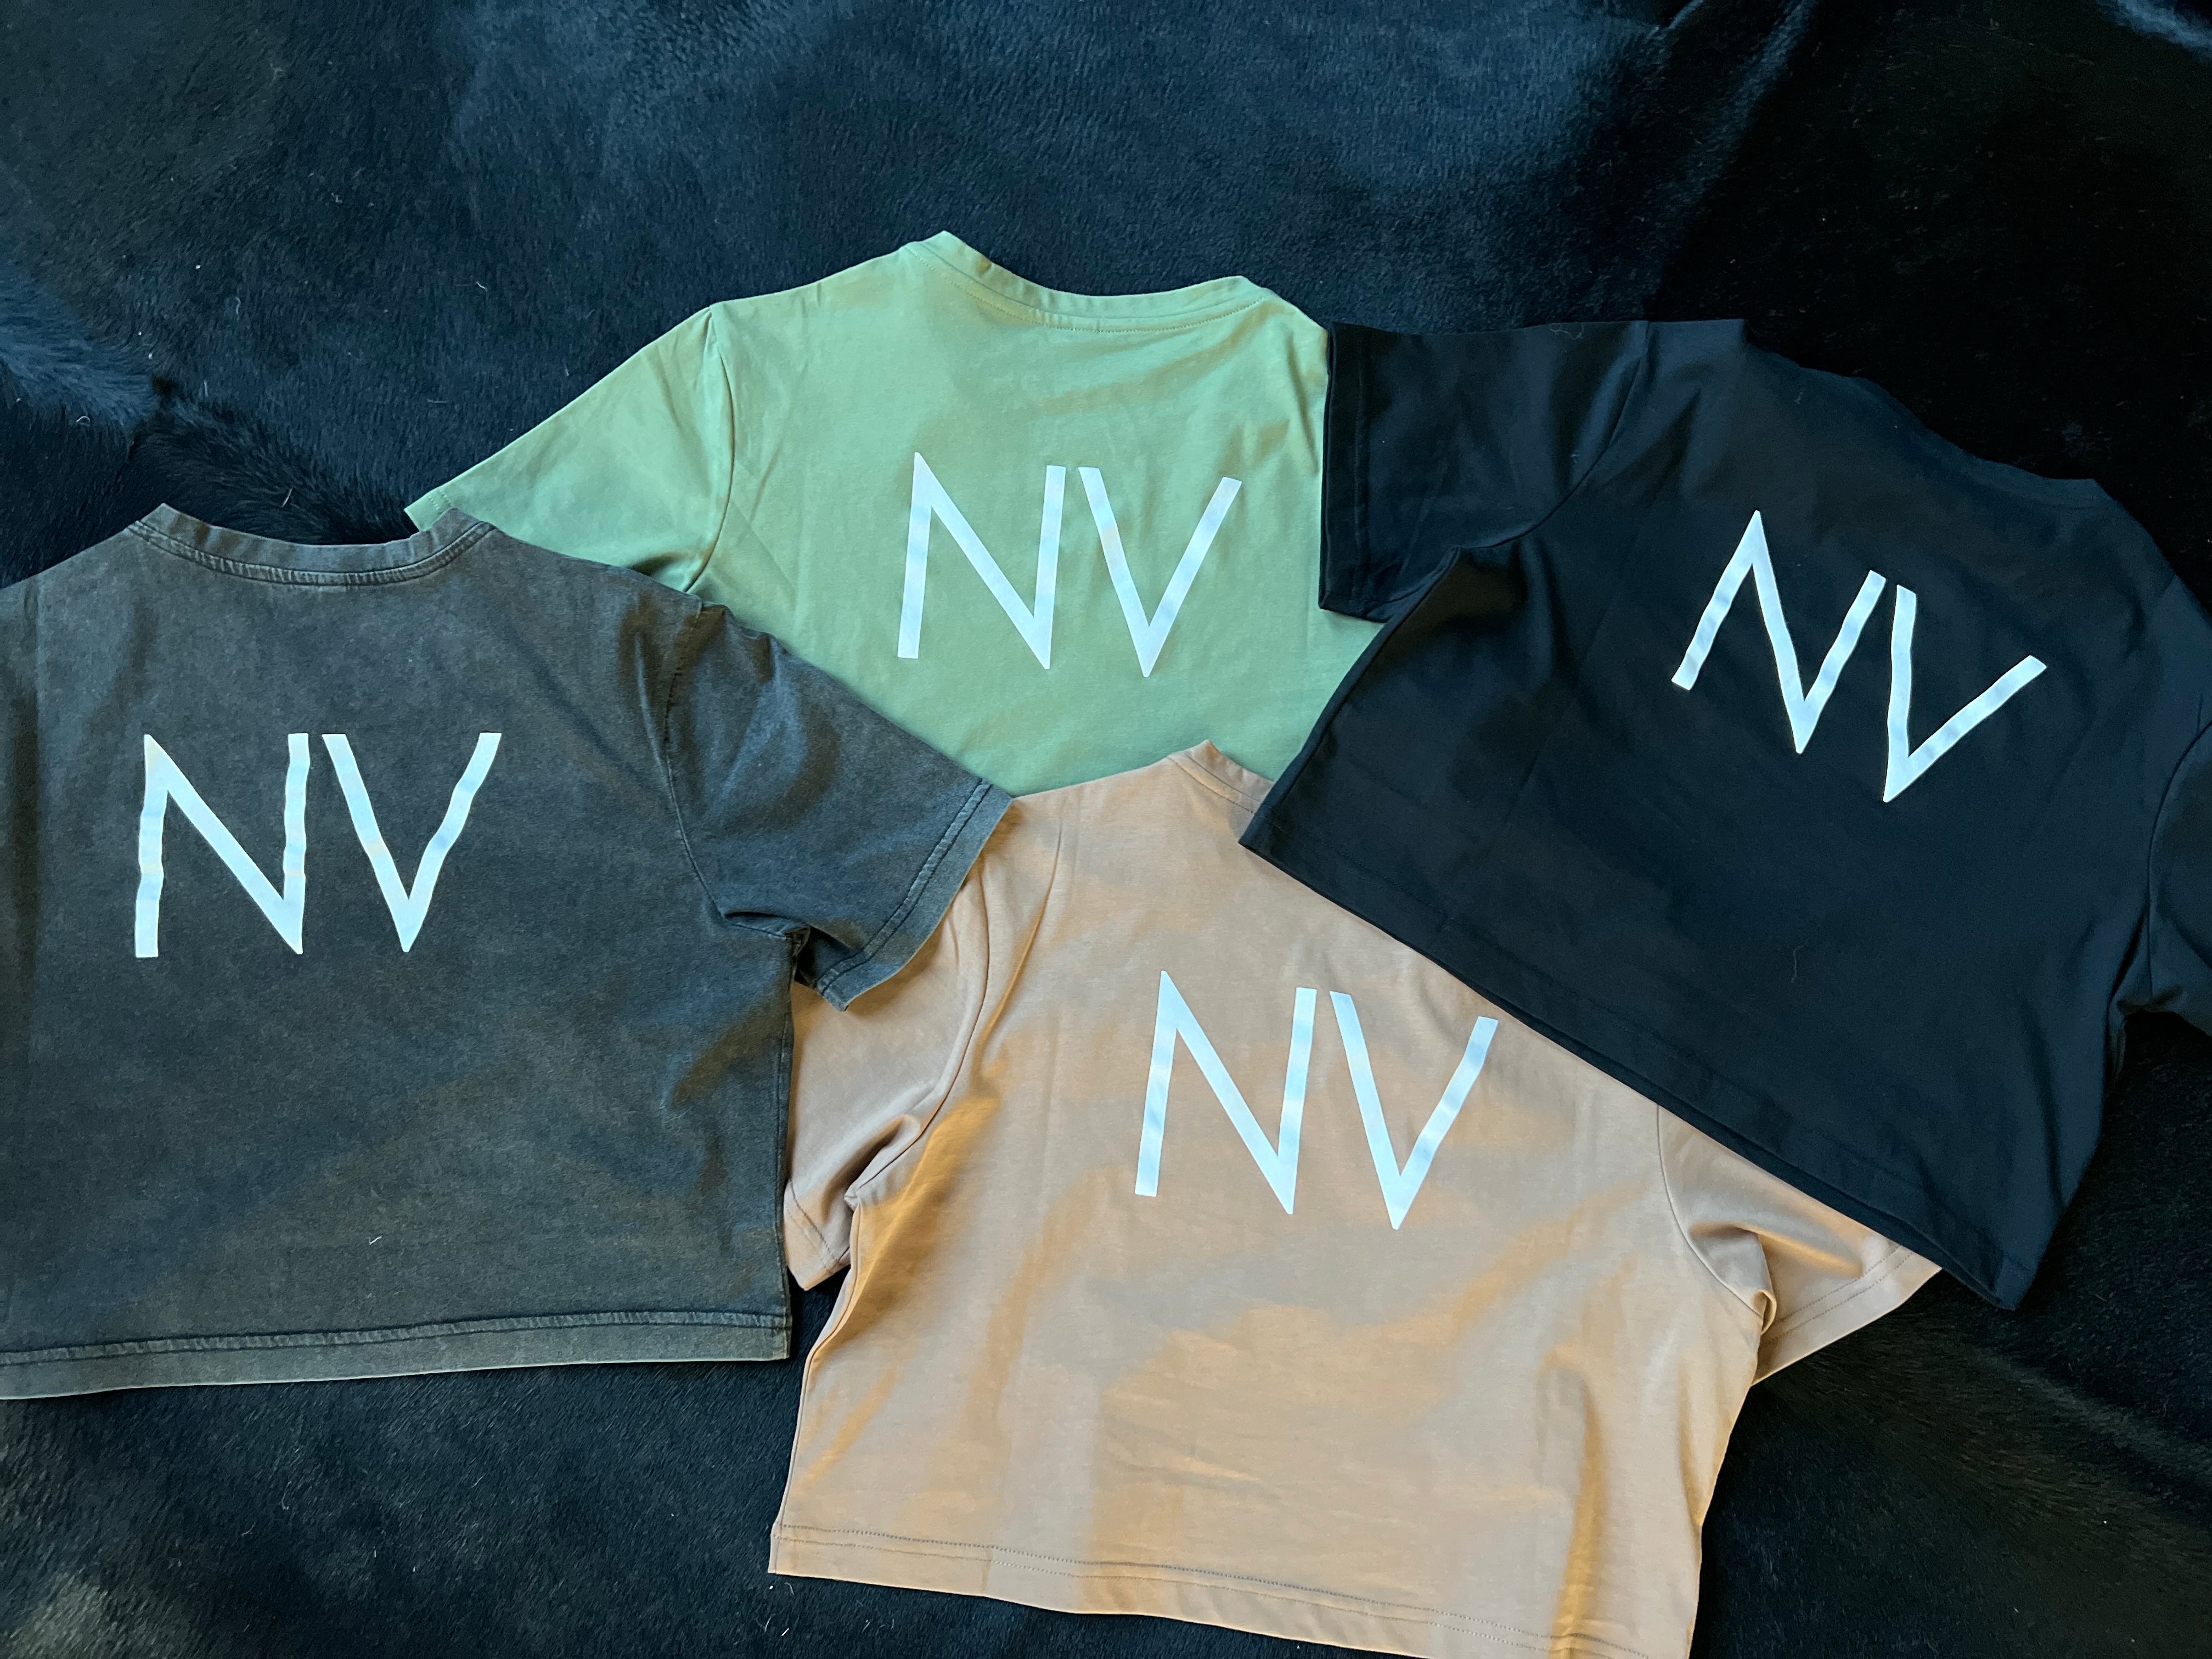 NV T-shirts